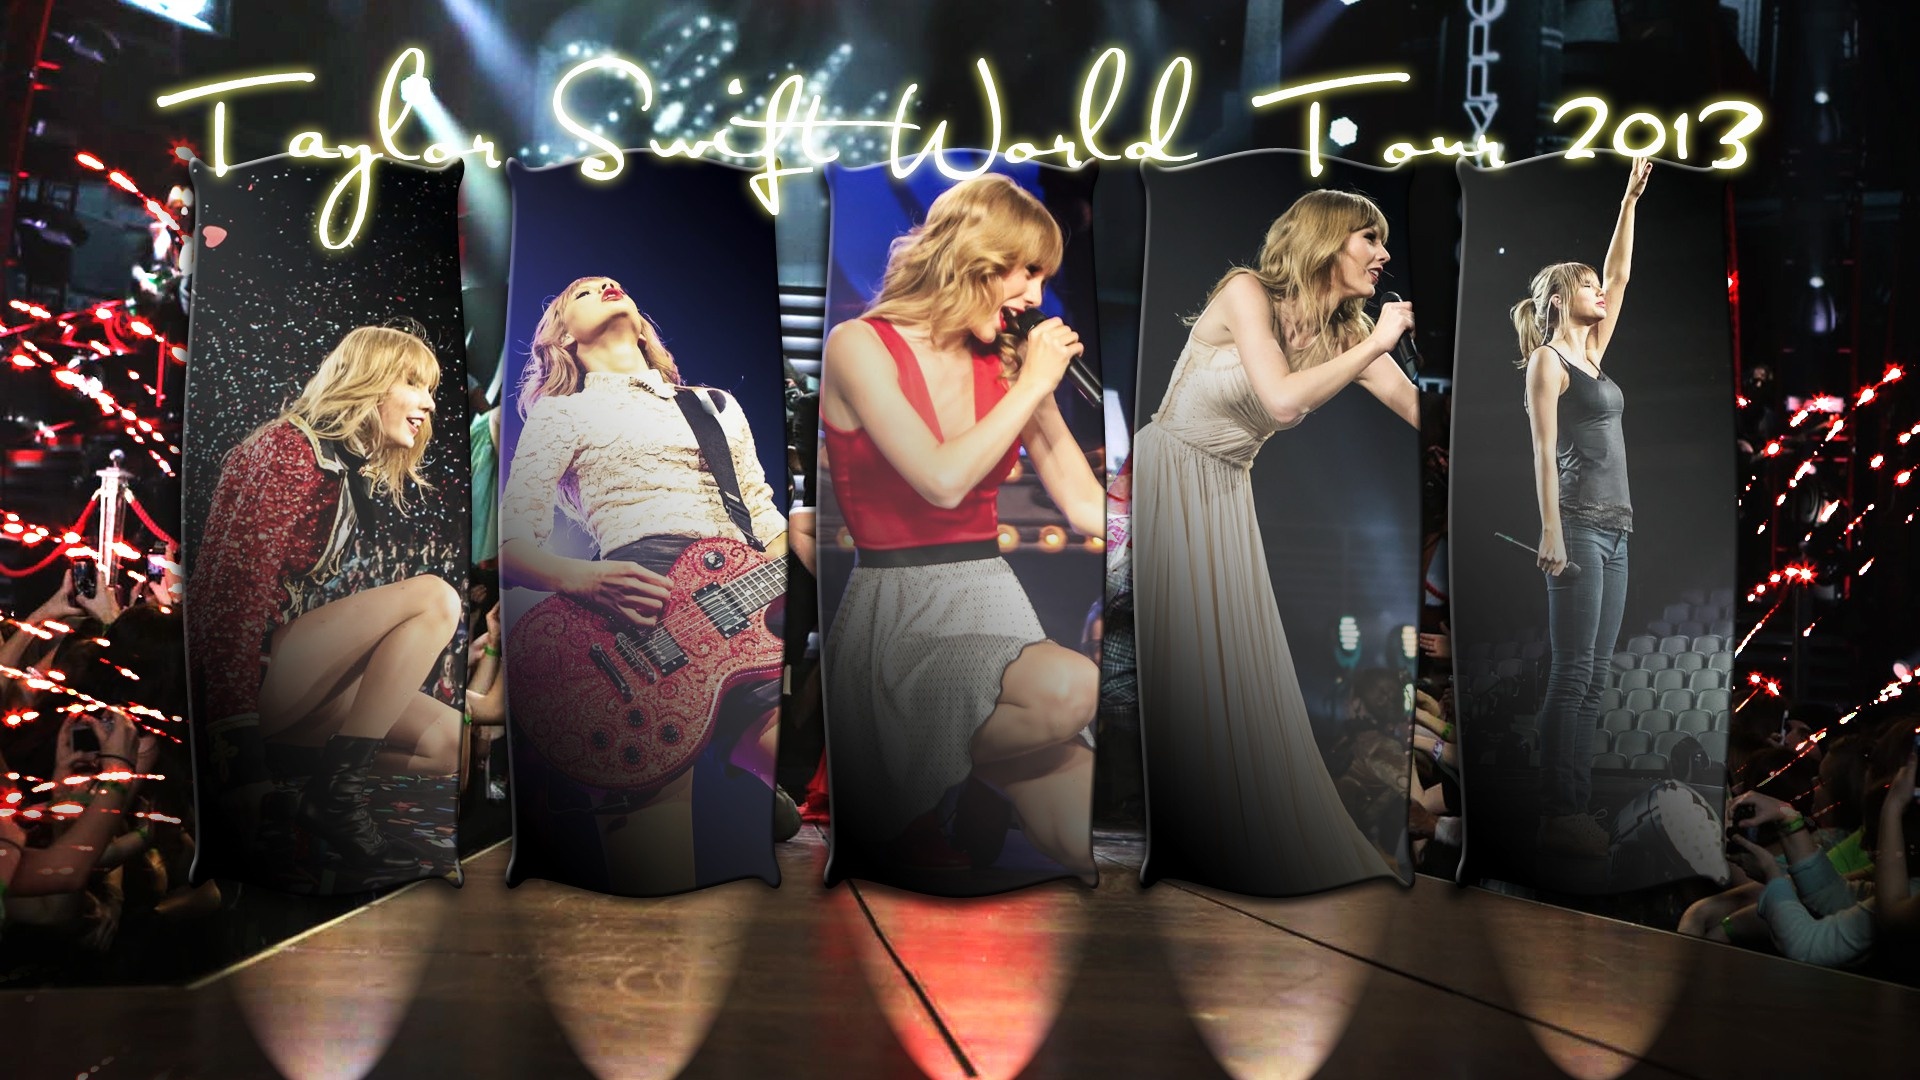 Music - Taylor Swift Wallpaper